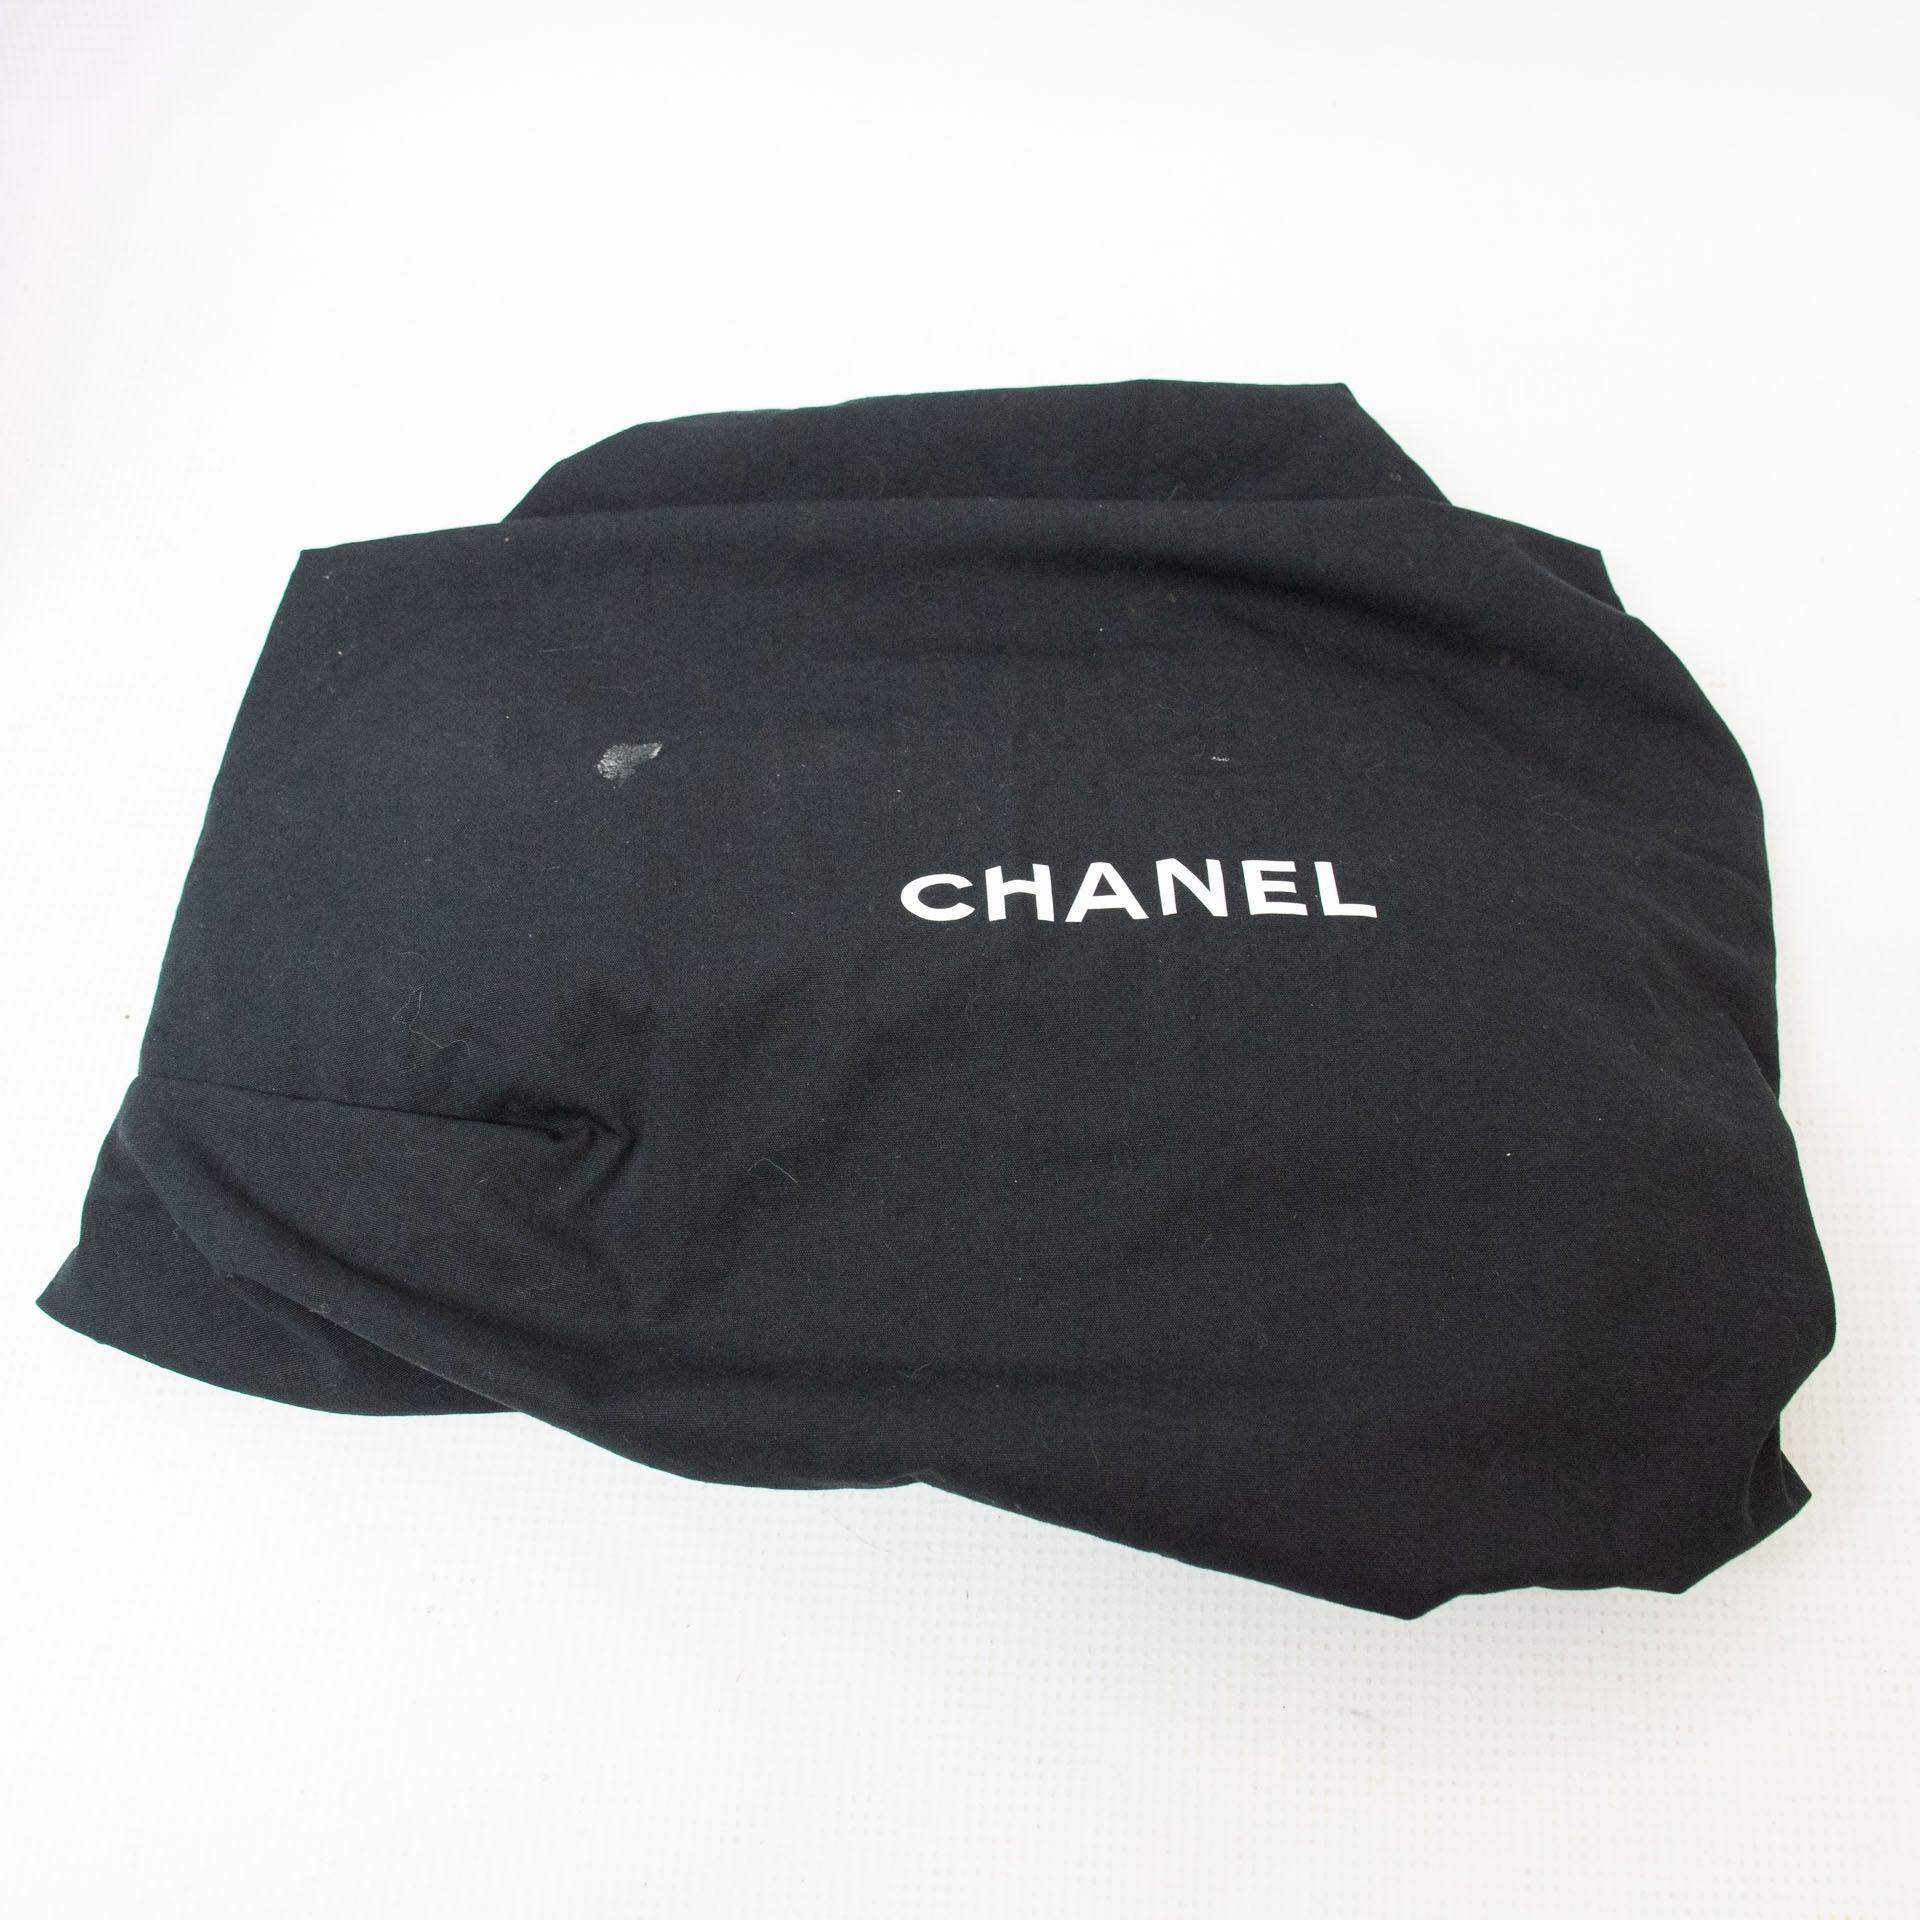 chanel vanity caviar bag